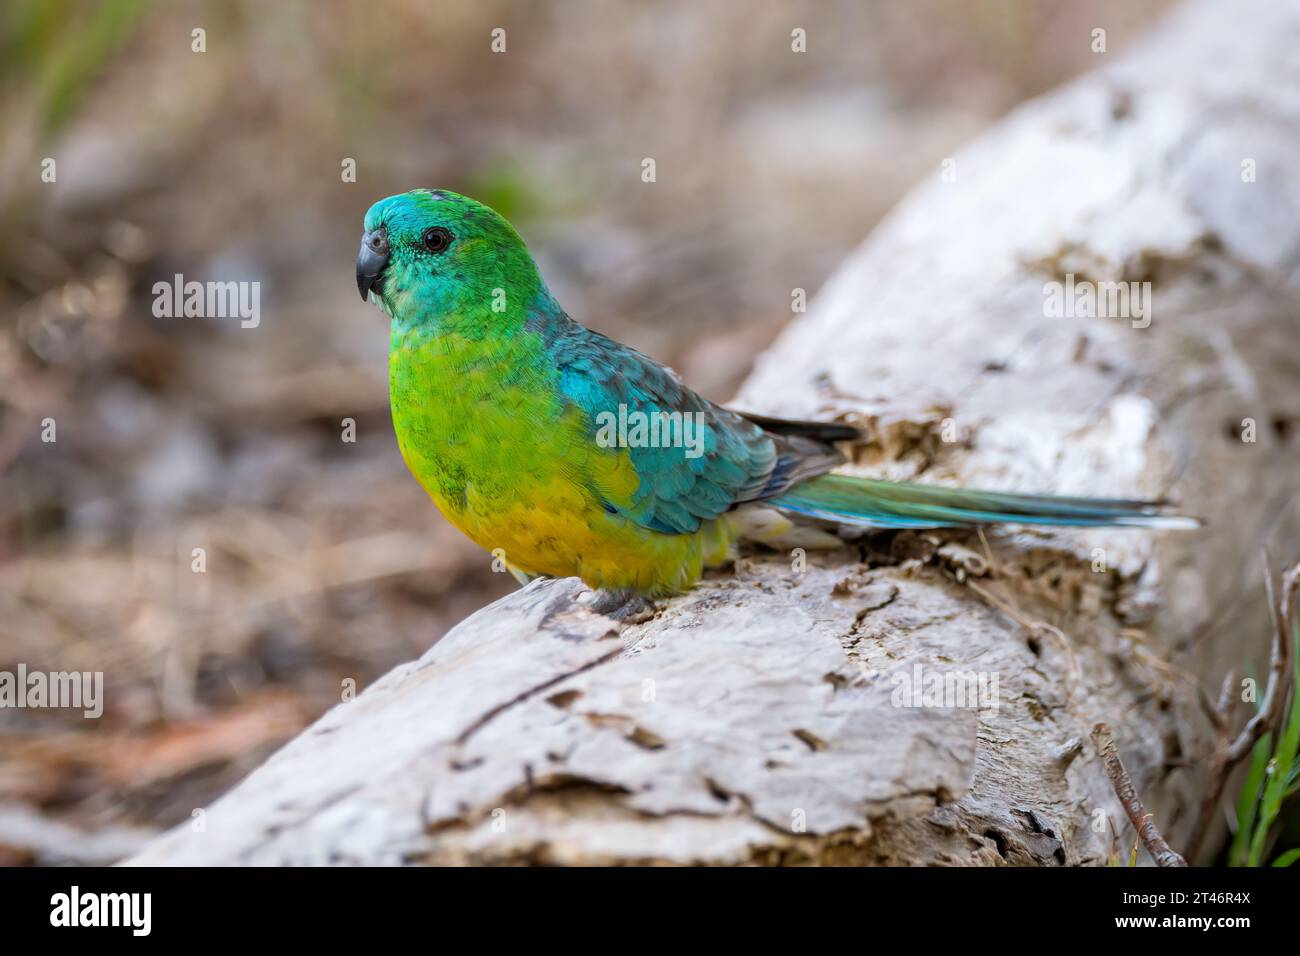 turquoise parrot, Neophema pulchella, on the ground, Melbourne, Australia Stock Photo